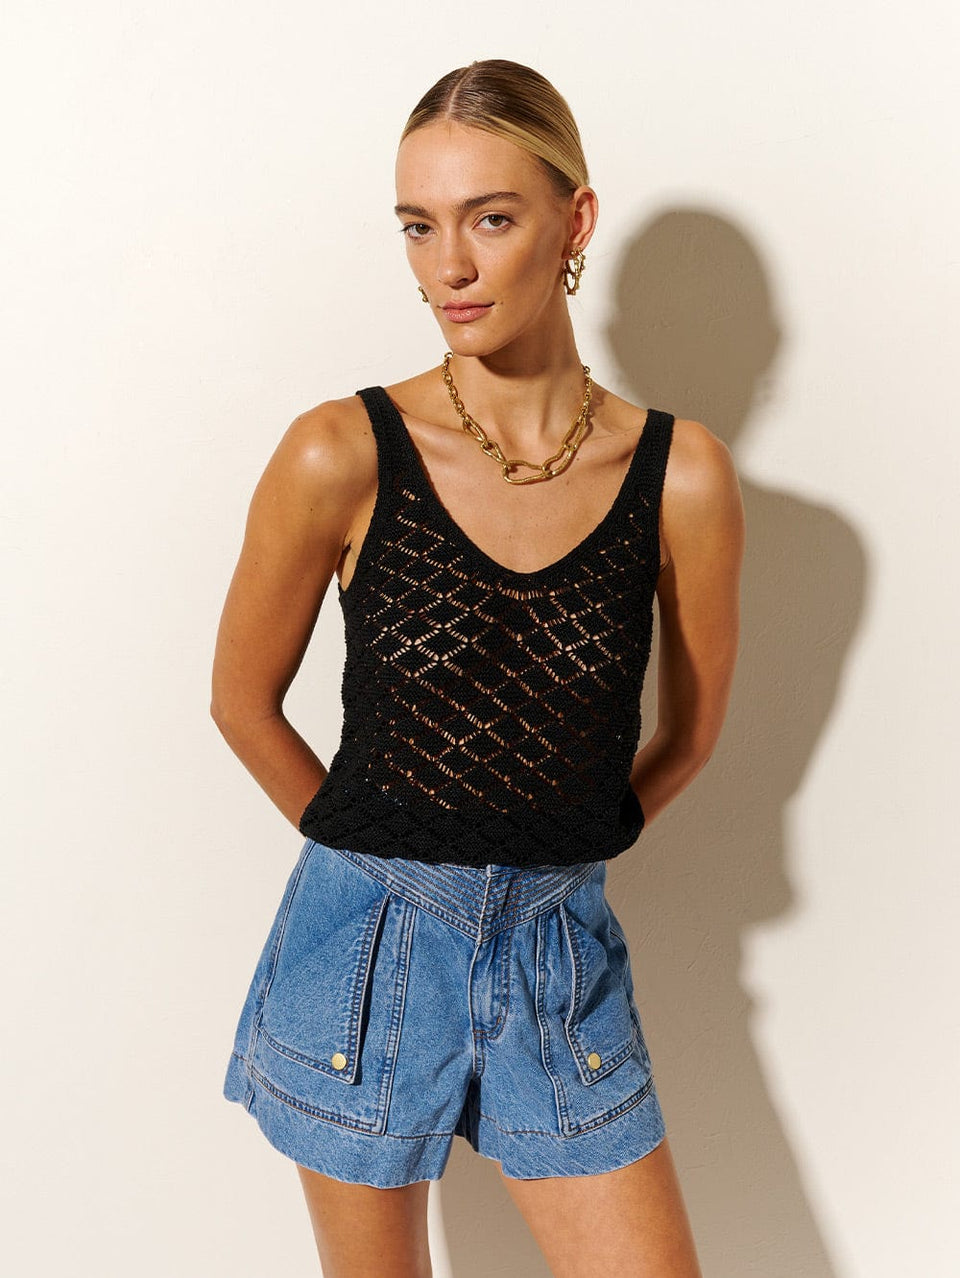 Irie Crochet Cami KIVARI | Model wears black crochet tank